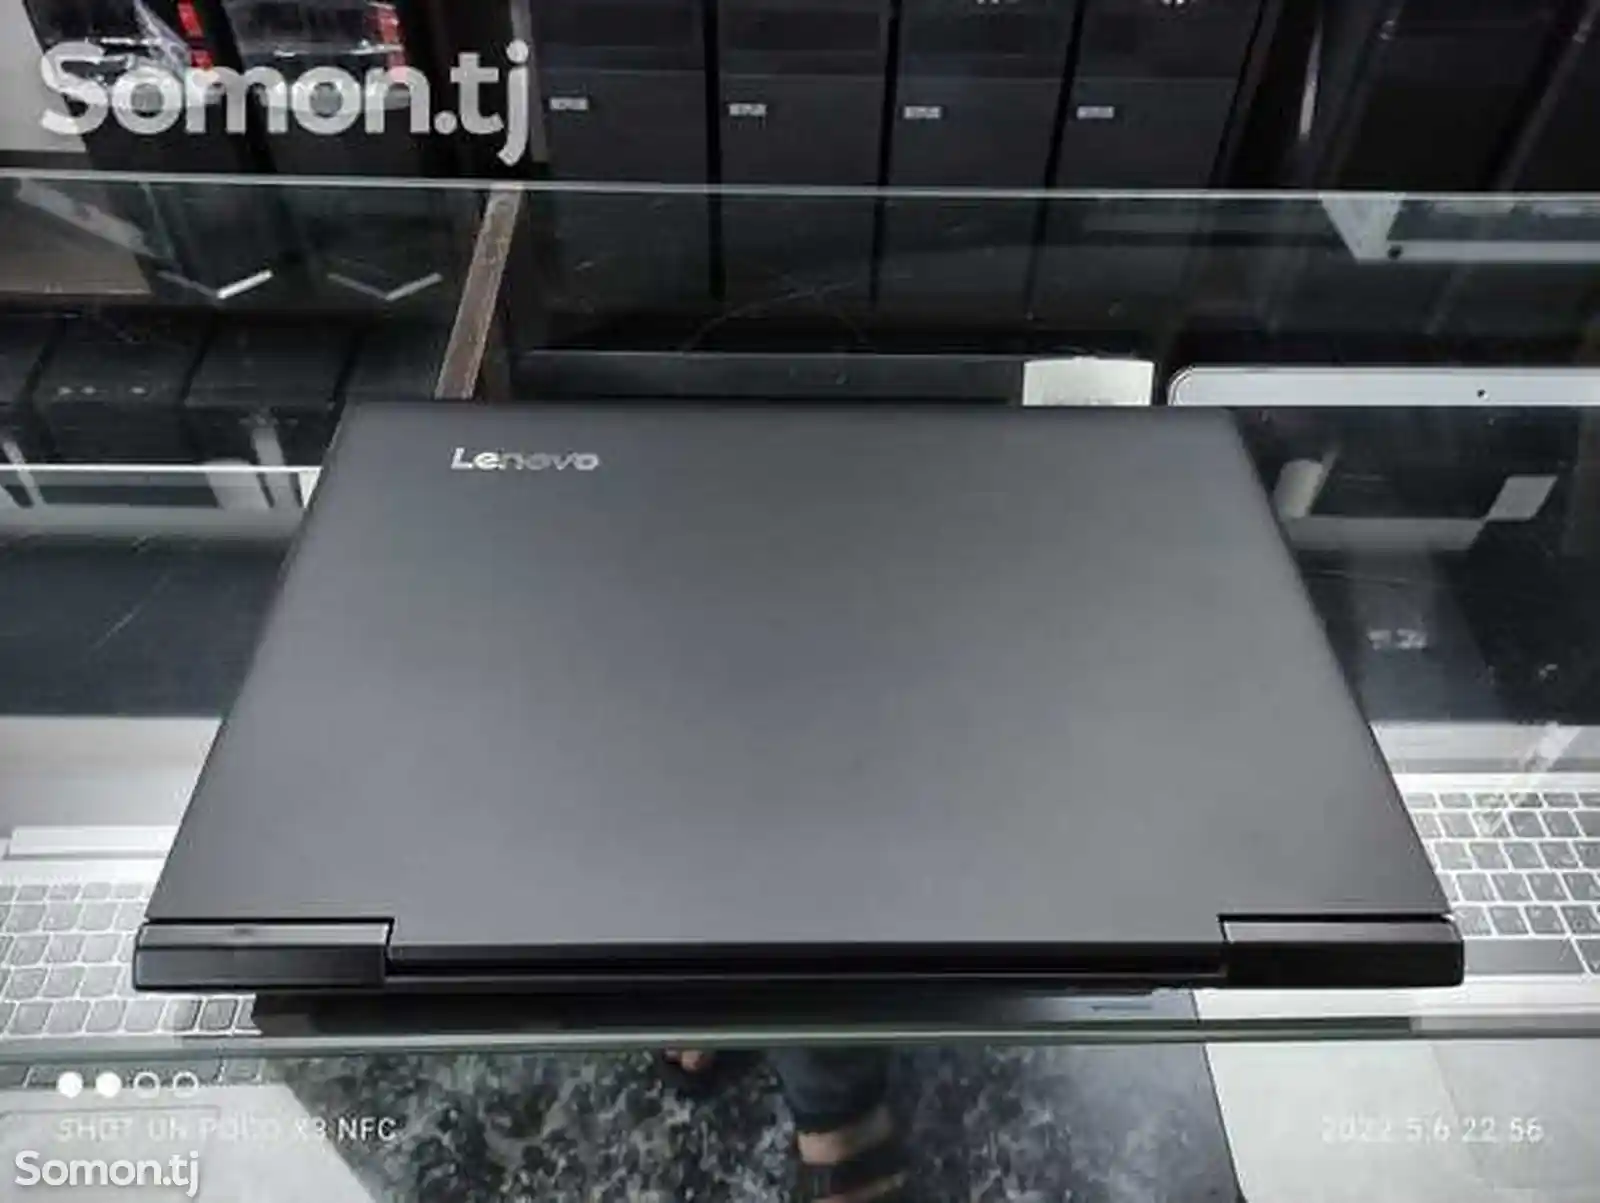 Игровой Ноутбук Lenovo Ideapad 700 Gaming Core i5-6300HQ GTX 950M 4GB 256GB 1TB-7